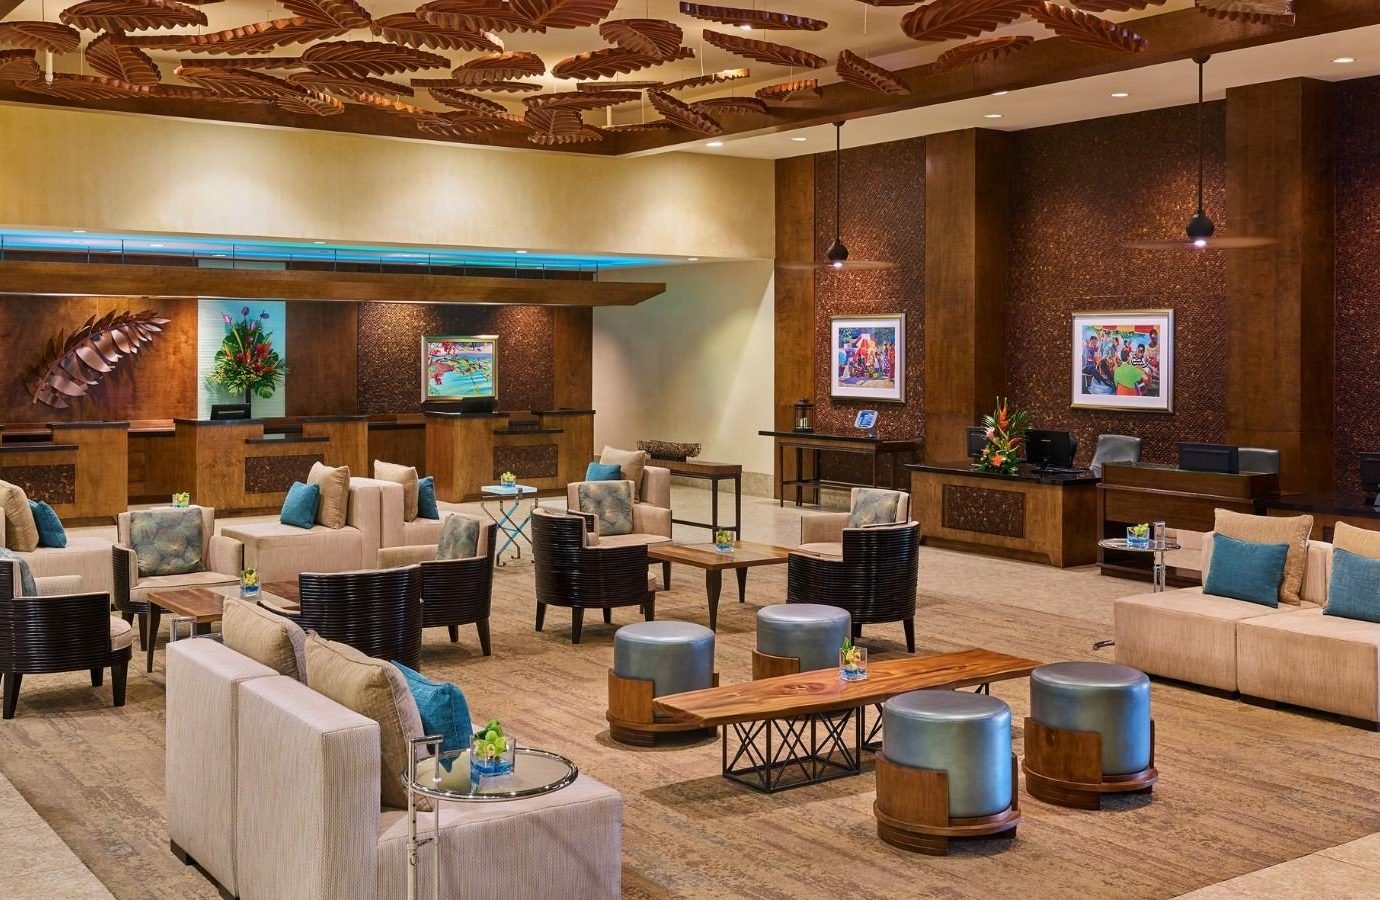 Hotels Lobby interior design restaurant furniture